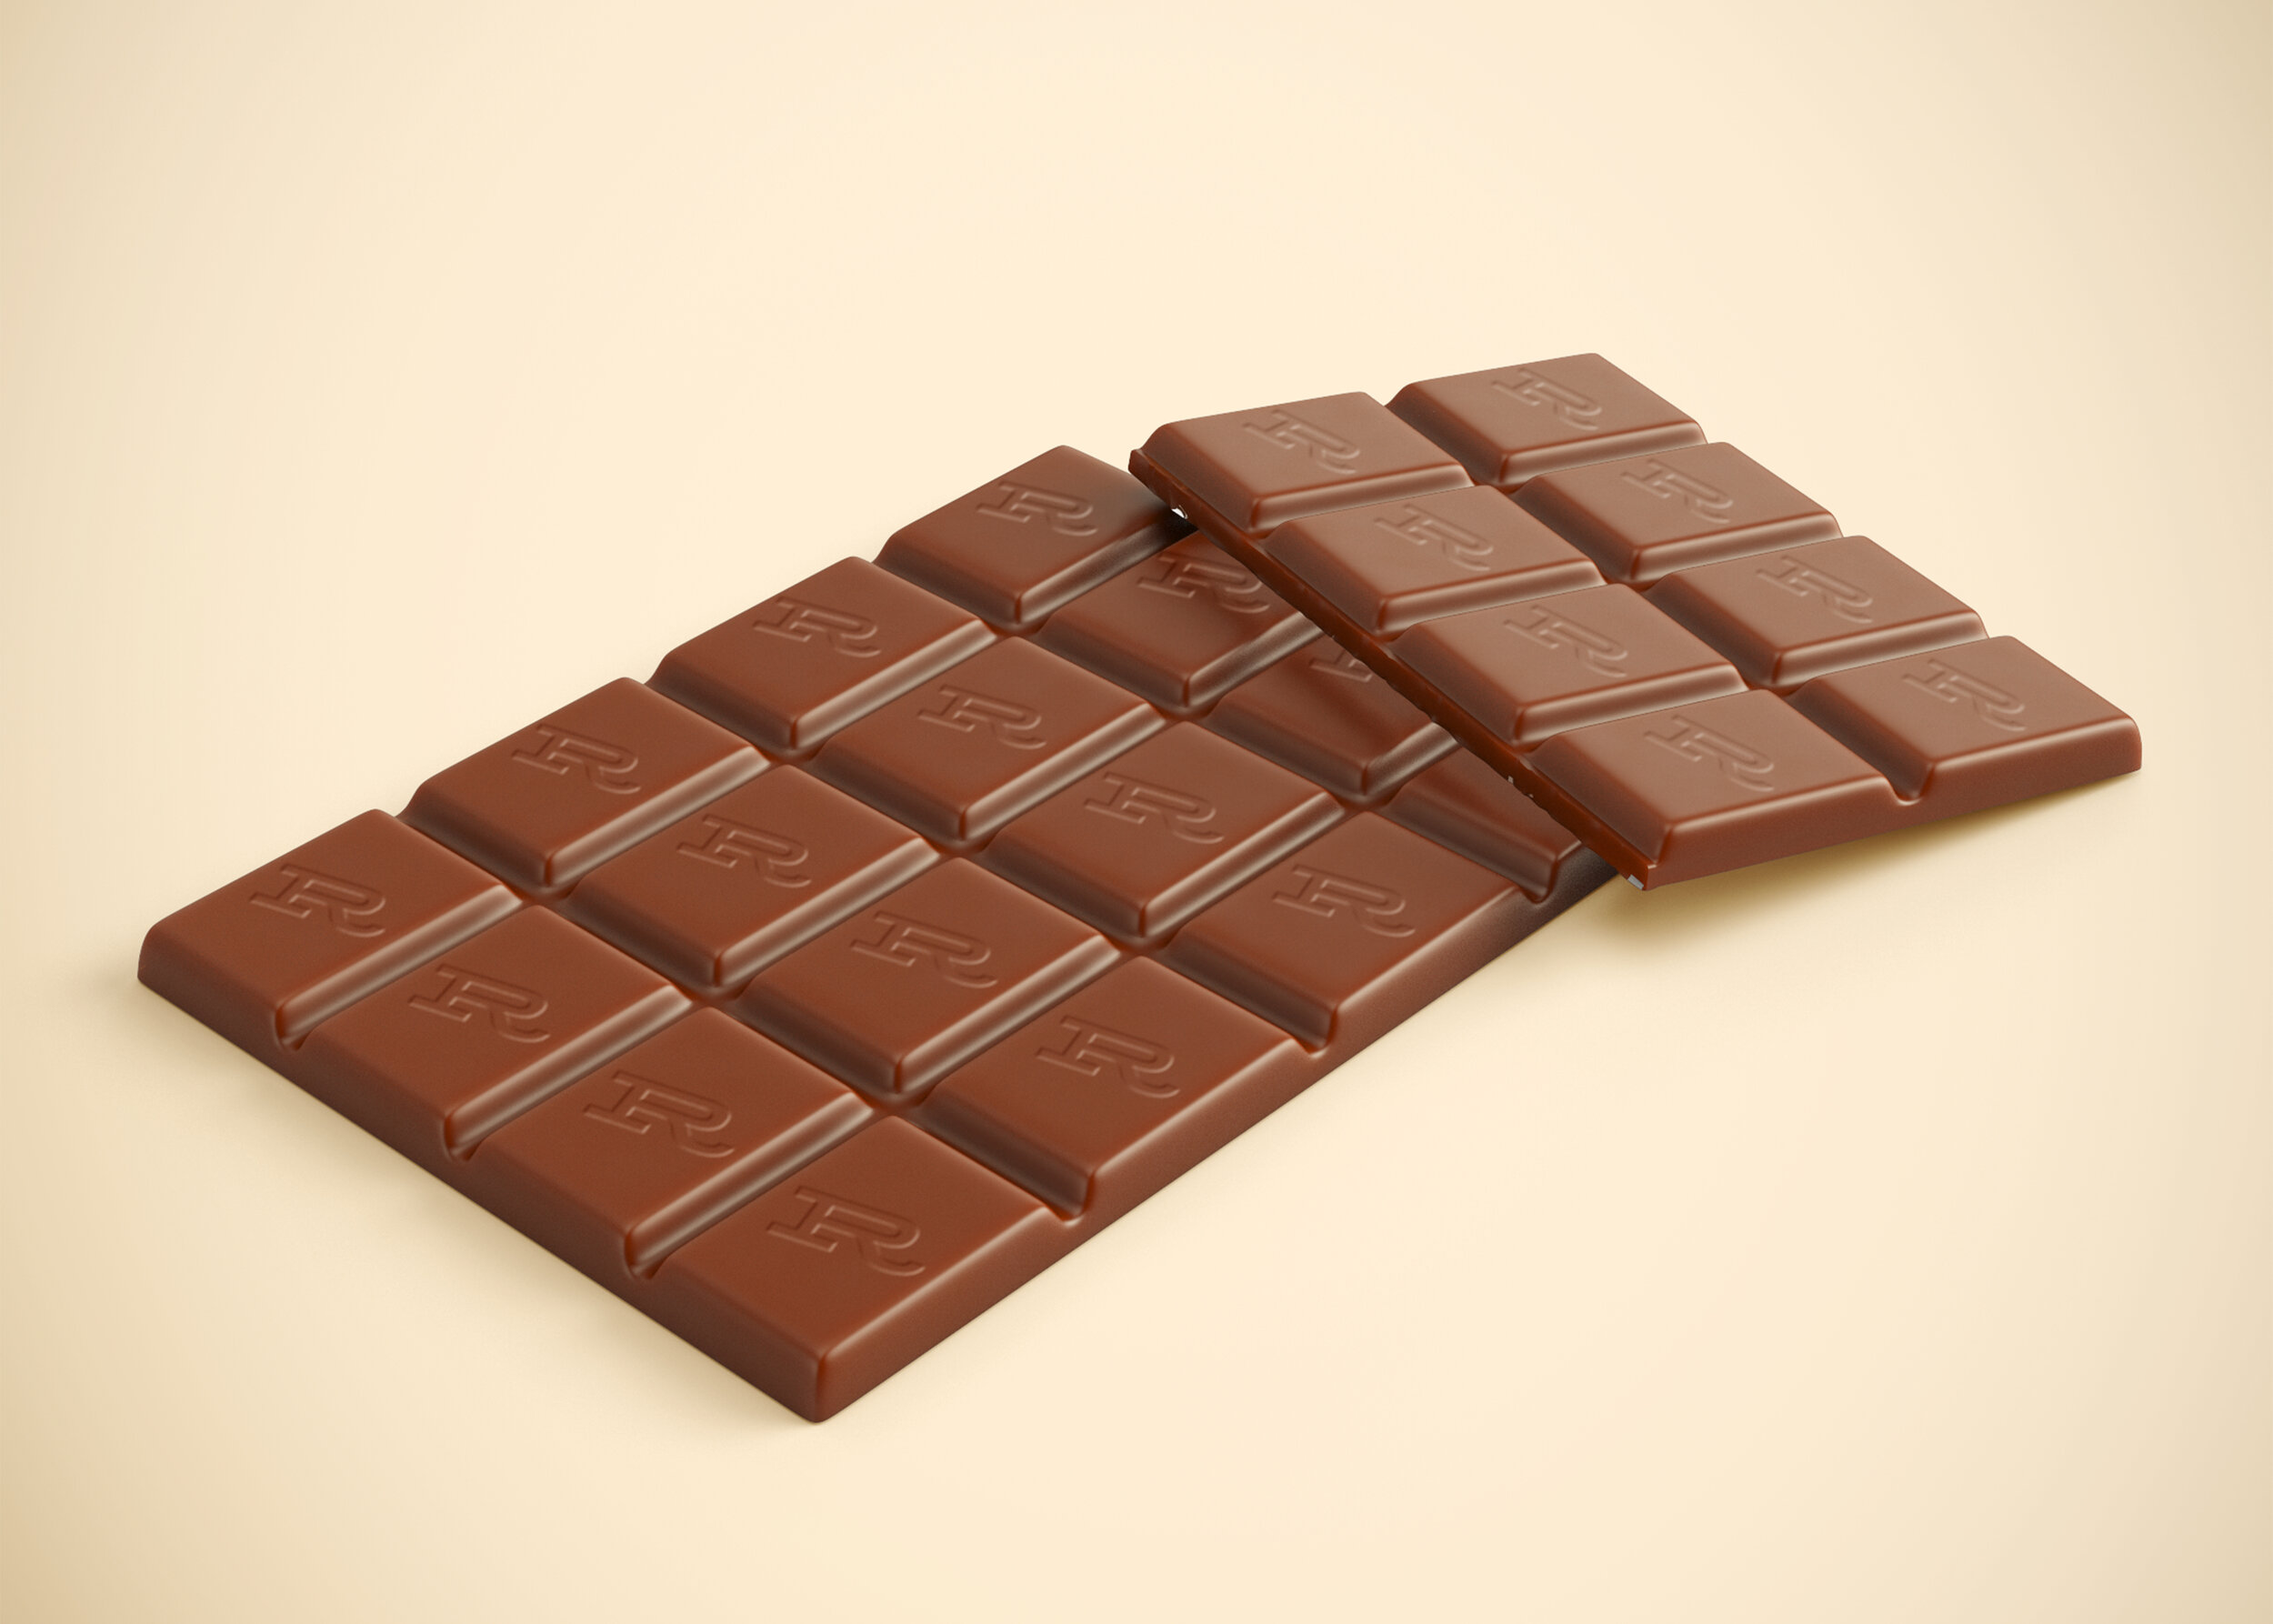 Пачки шоколада. Шоколад плиточный мокап. Плитка шоколада мокап. Шоколадная плитка. Плитка шоколада в обертке.